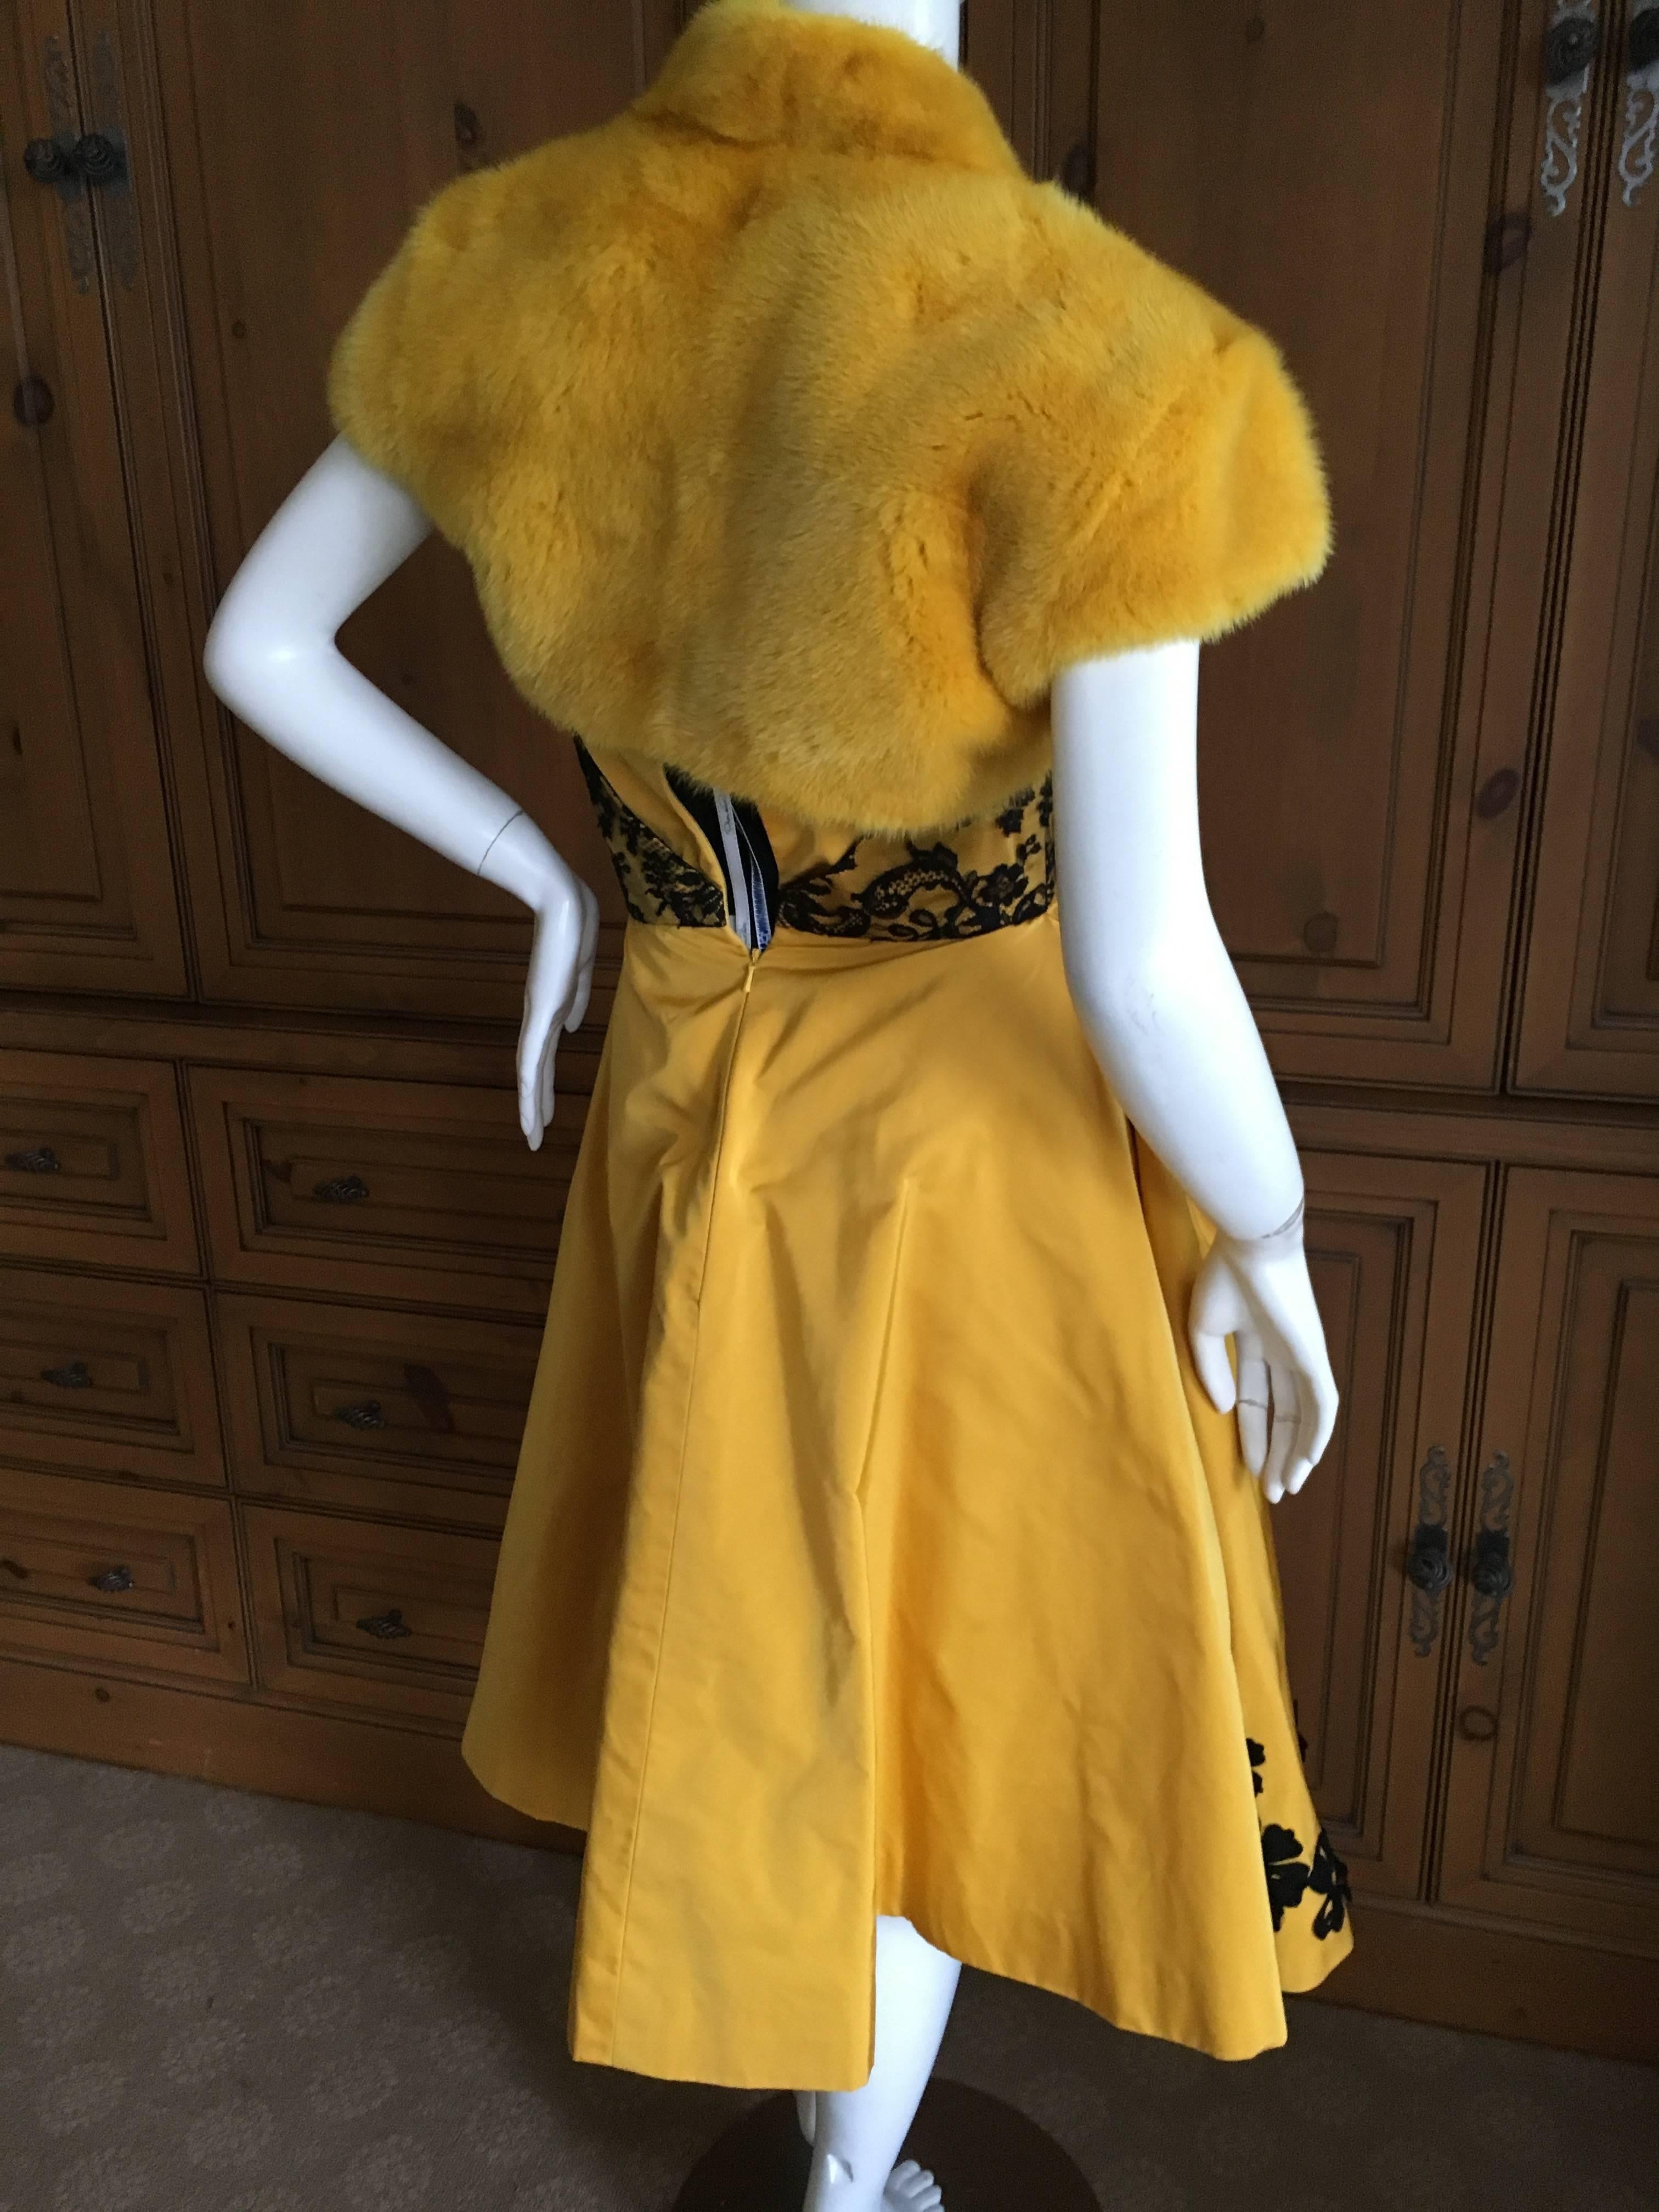 Oscar de la Renta Marigold Floral Strapless Evening Dress with Mink Shrug In Excellent Condition For Sale In Cloverdale, CA